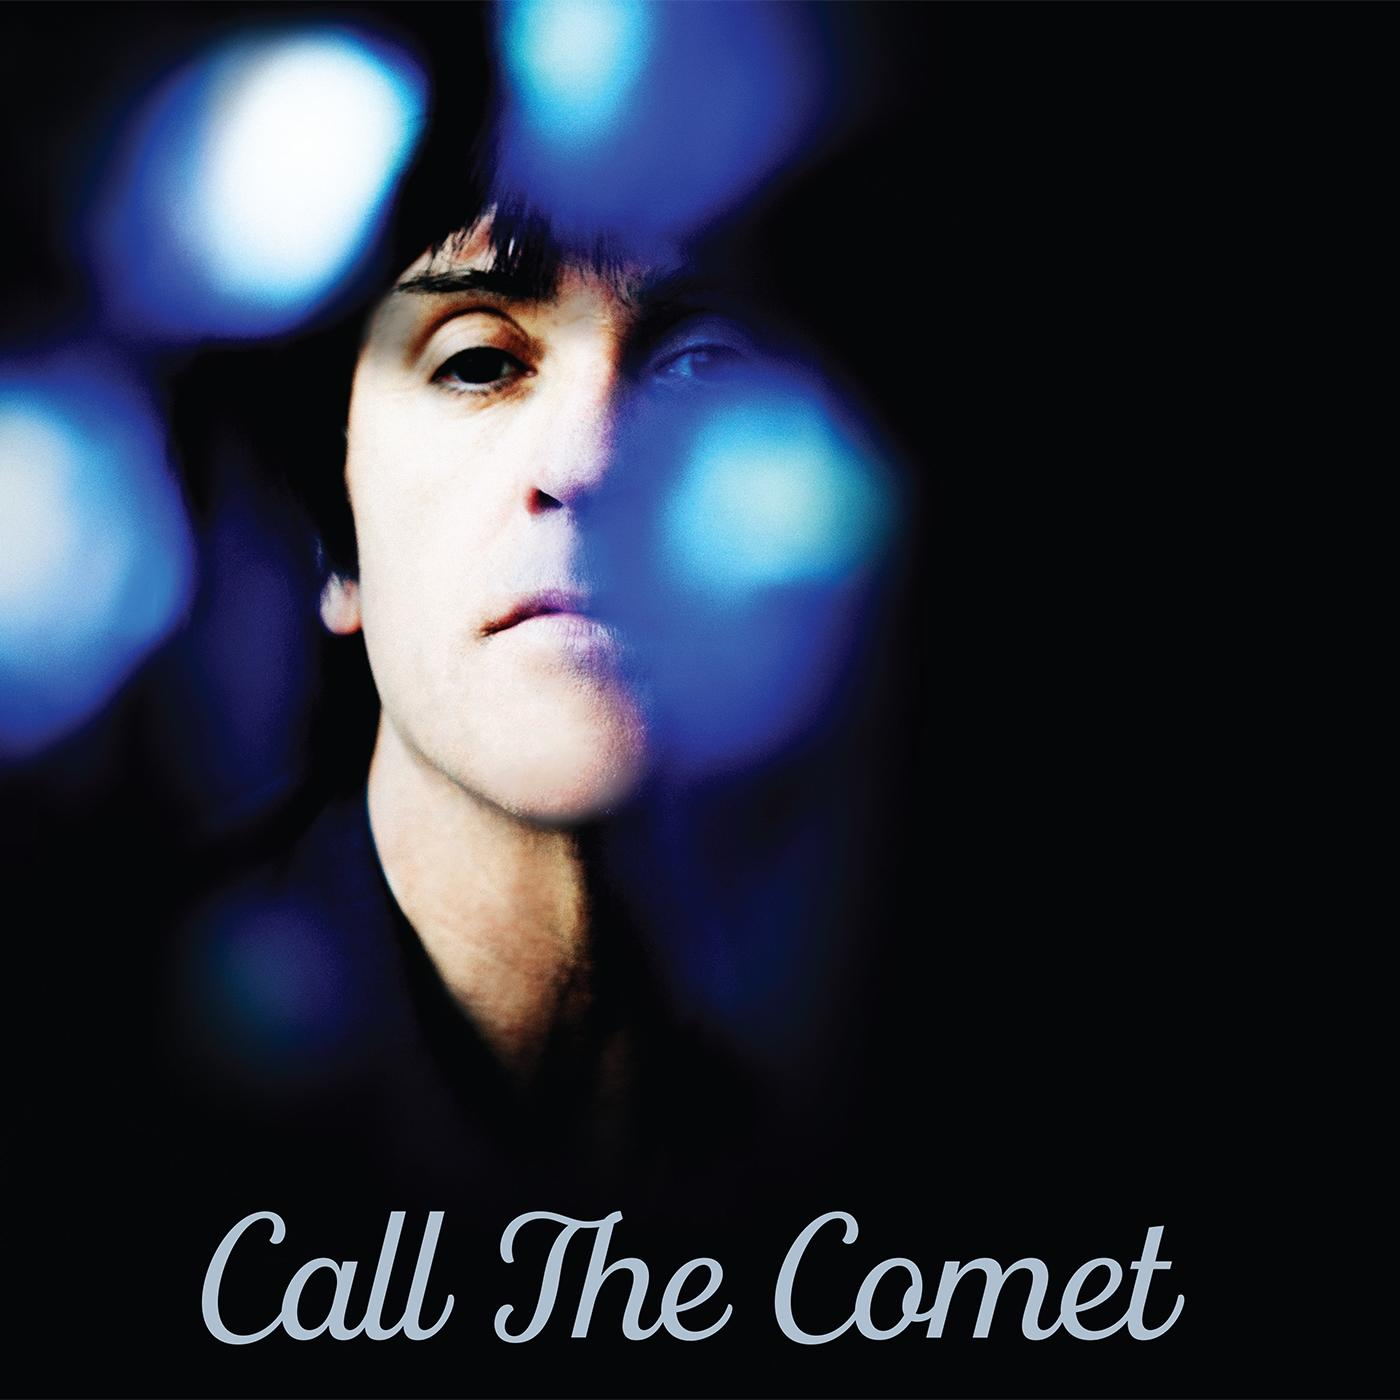 Johnny Marr - Call - Comet The (Vinyl)